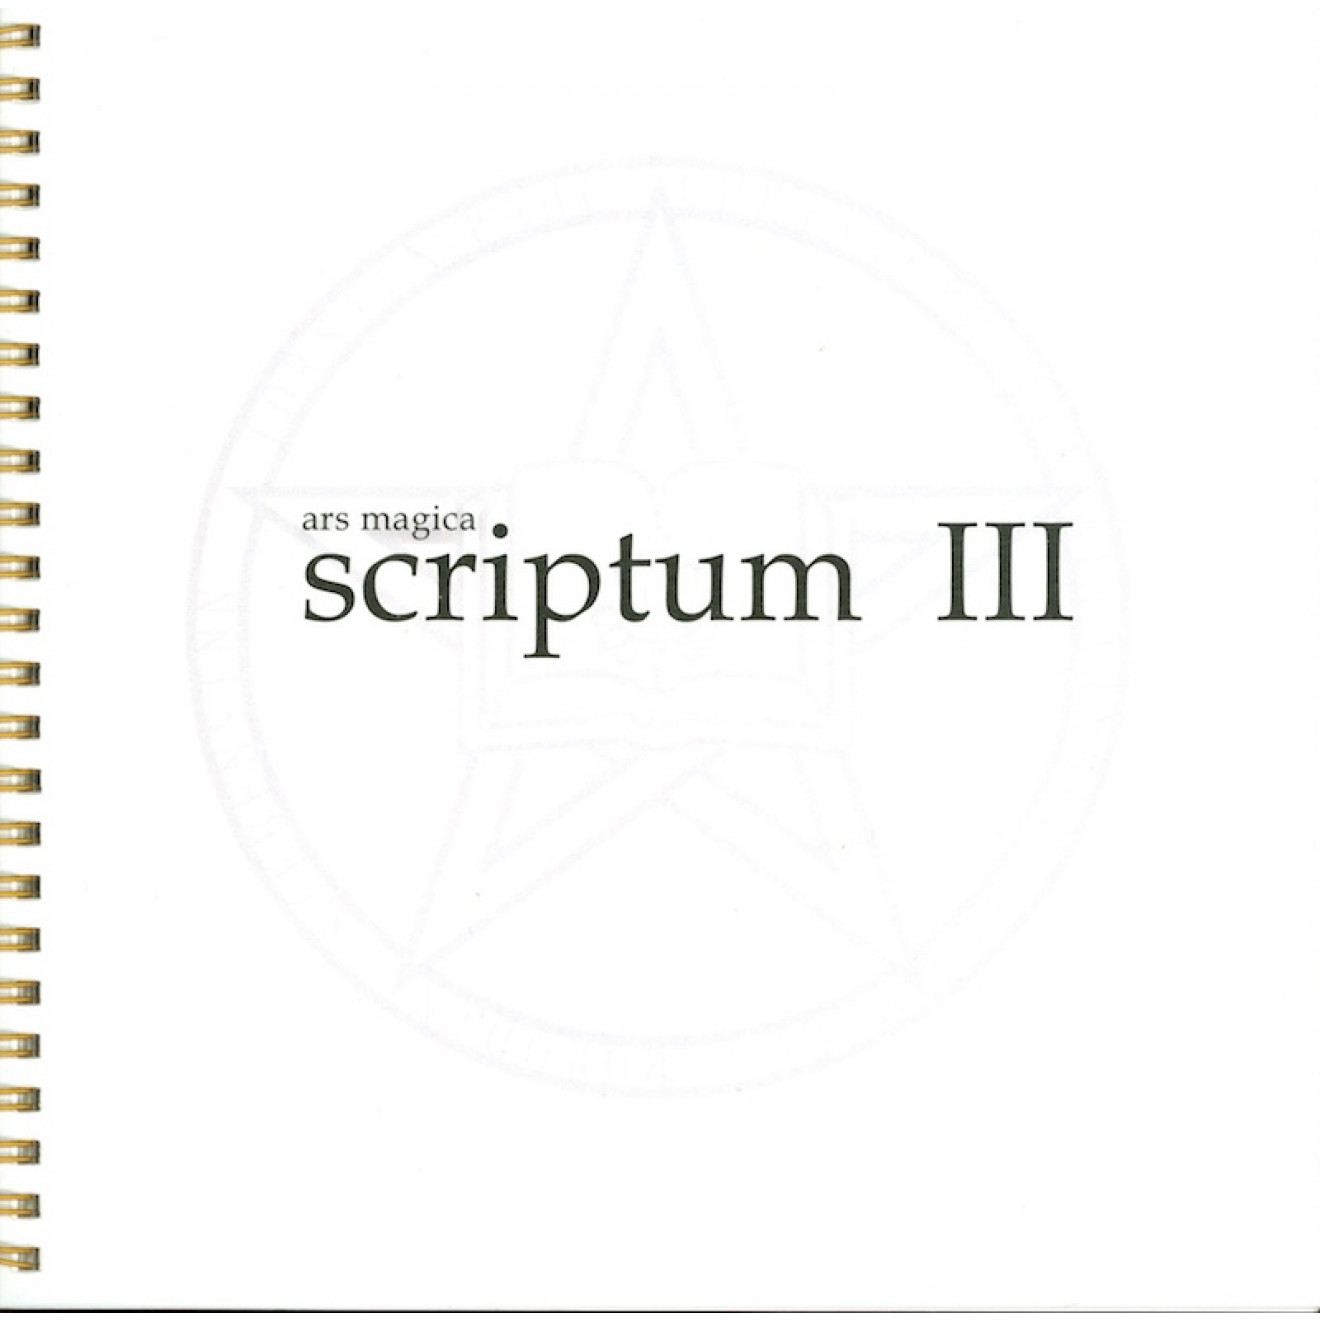 scriptum III